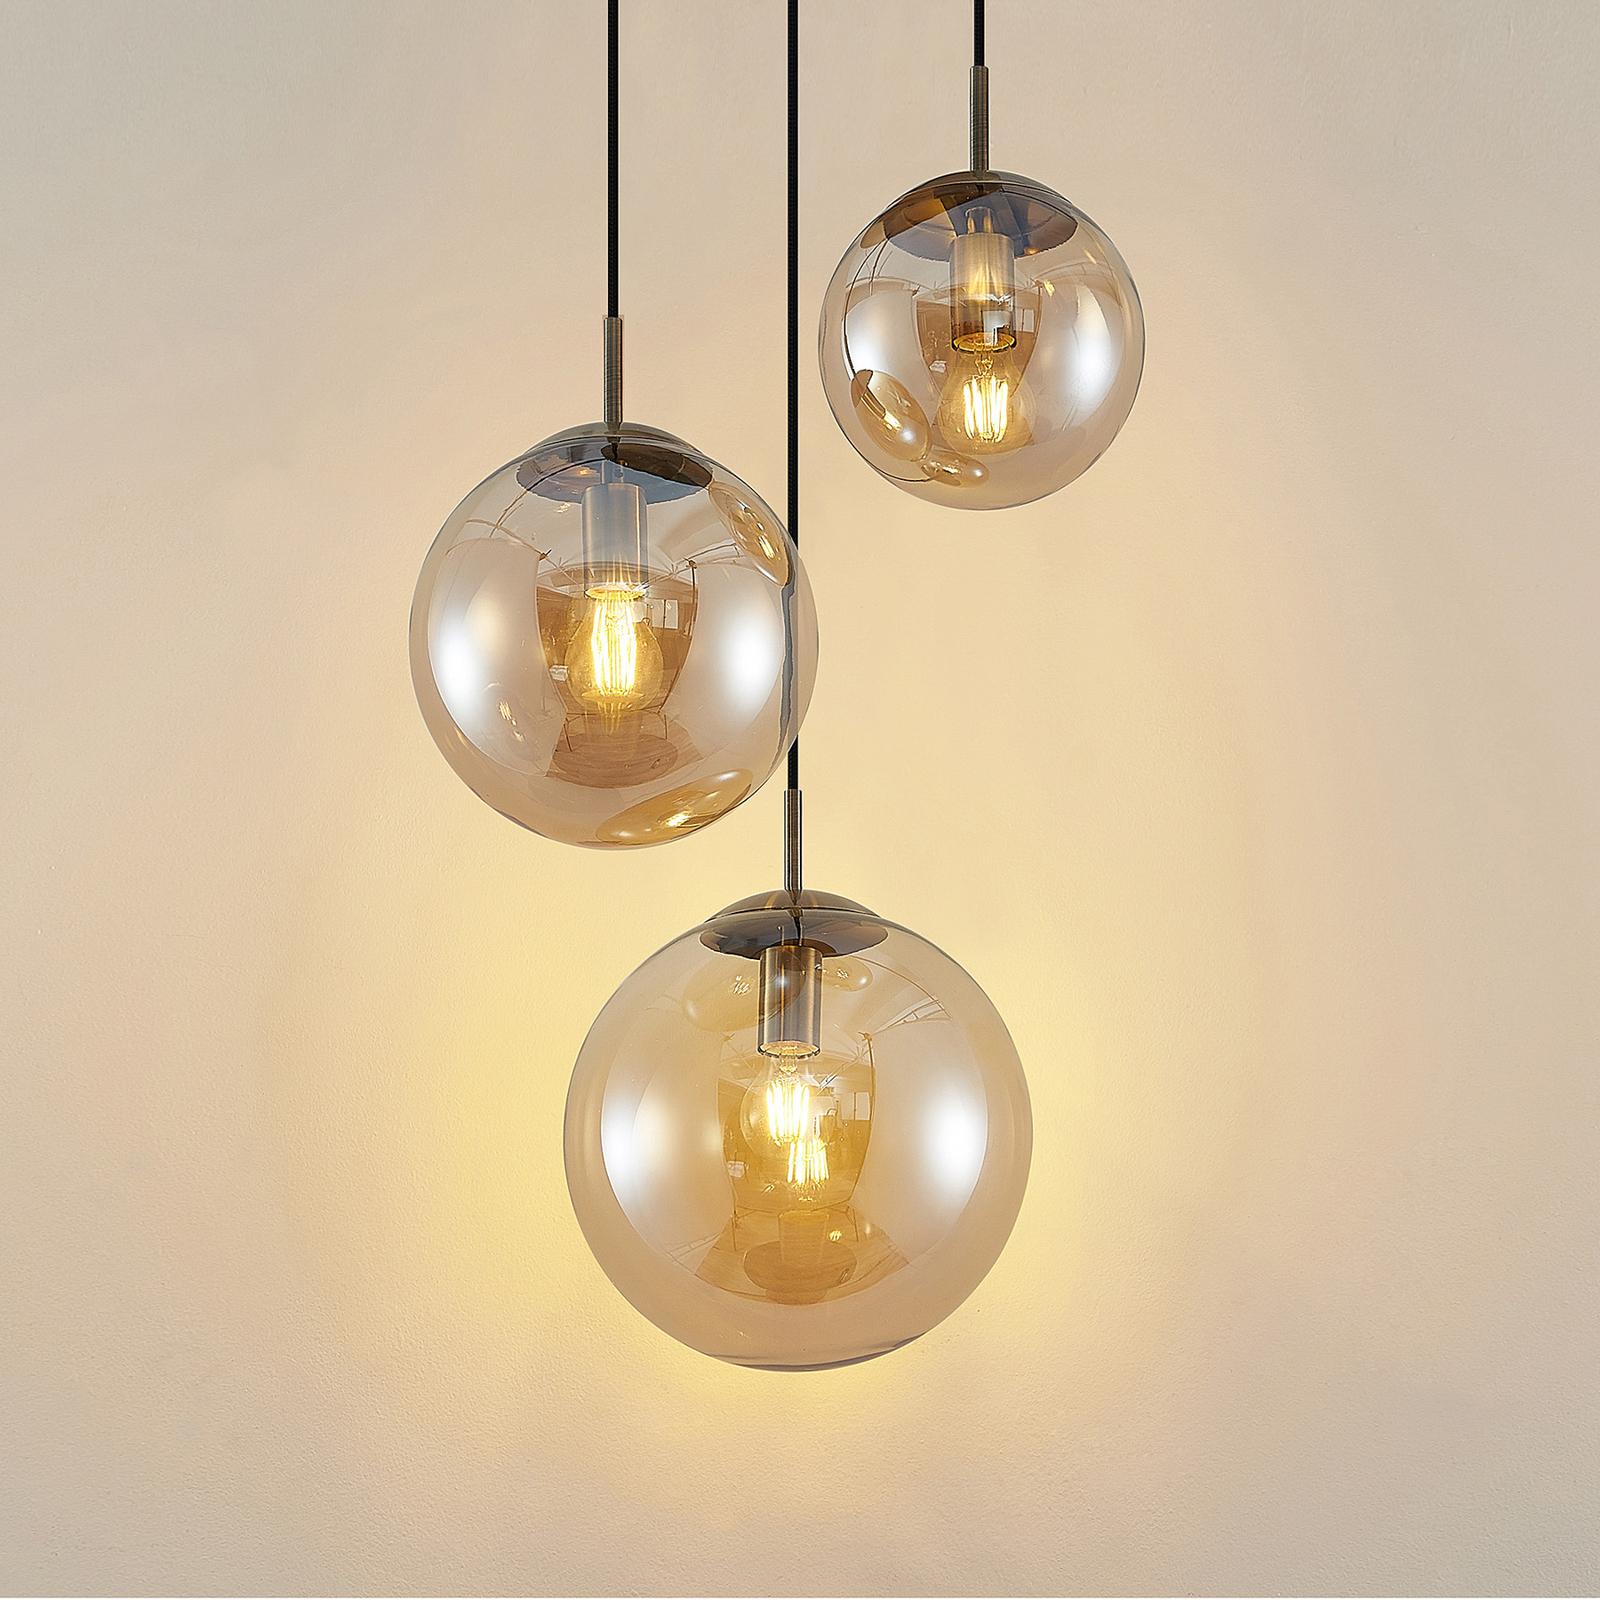 Lindby hanglamp, 3 glasbollen, amber | Lampen24.nl